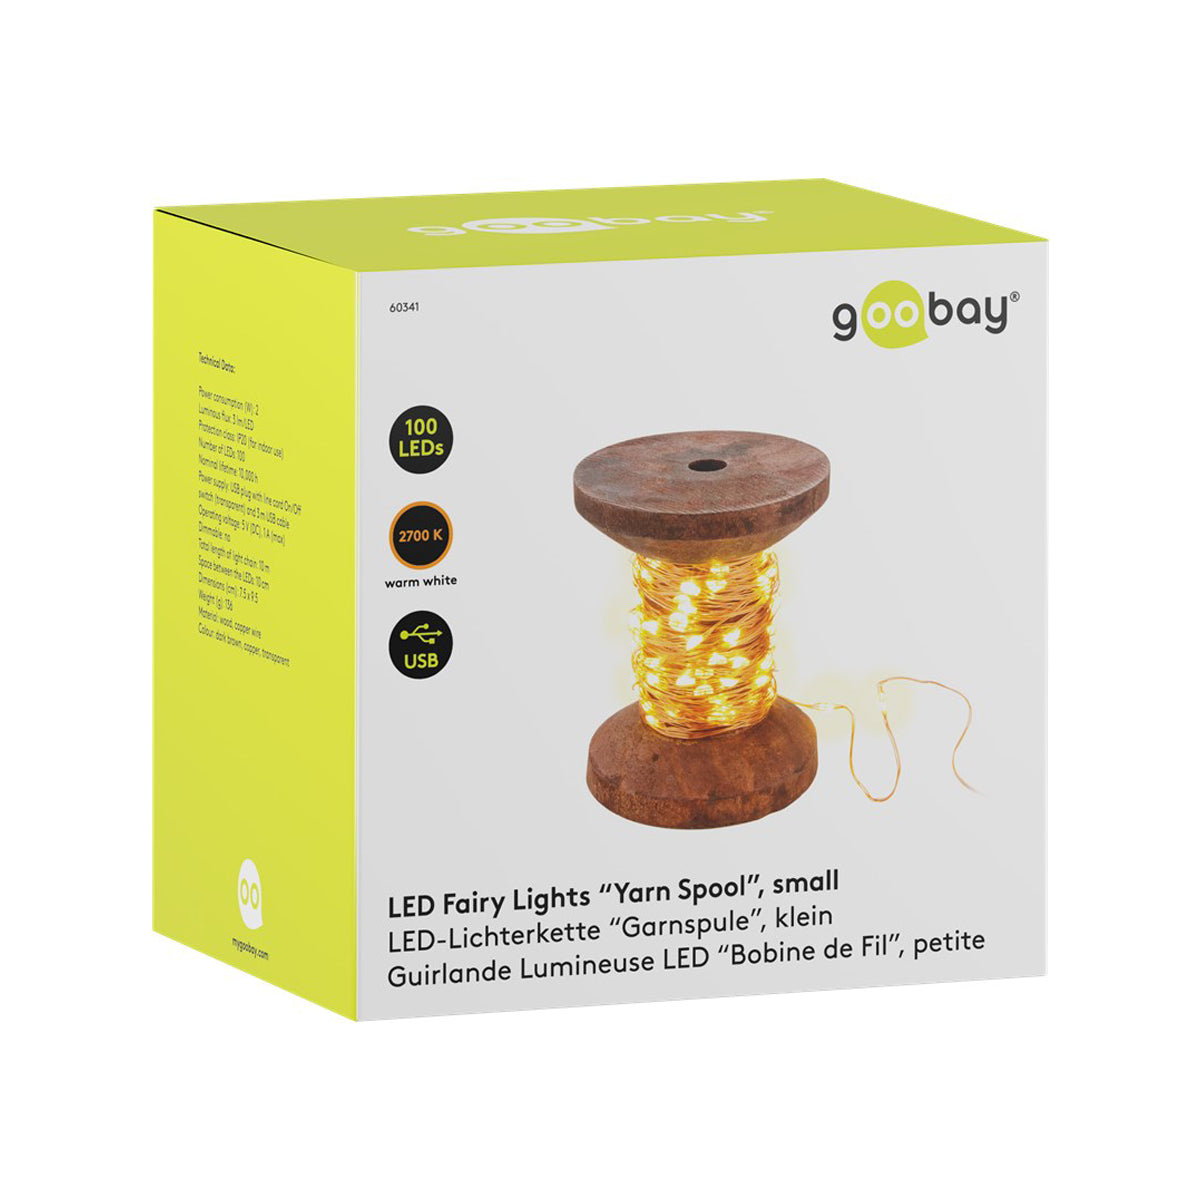 Goobay 100 micro LED Light Chain Yarn Bobbin.